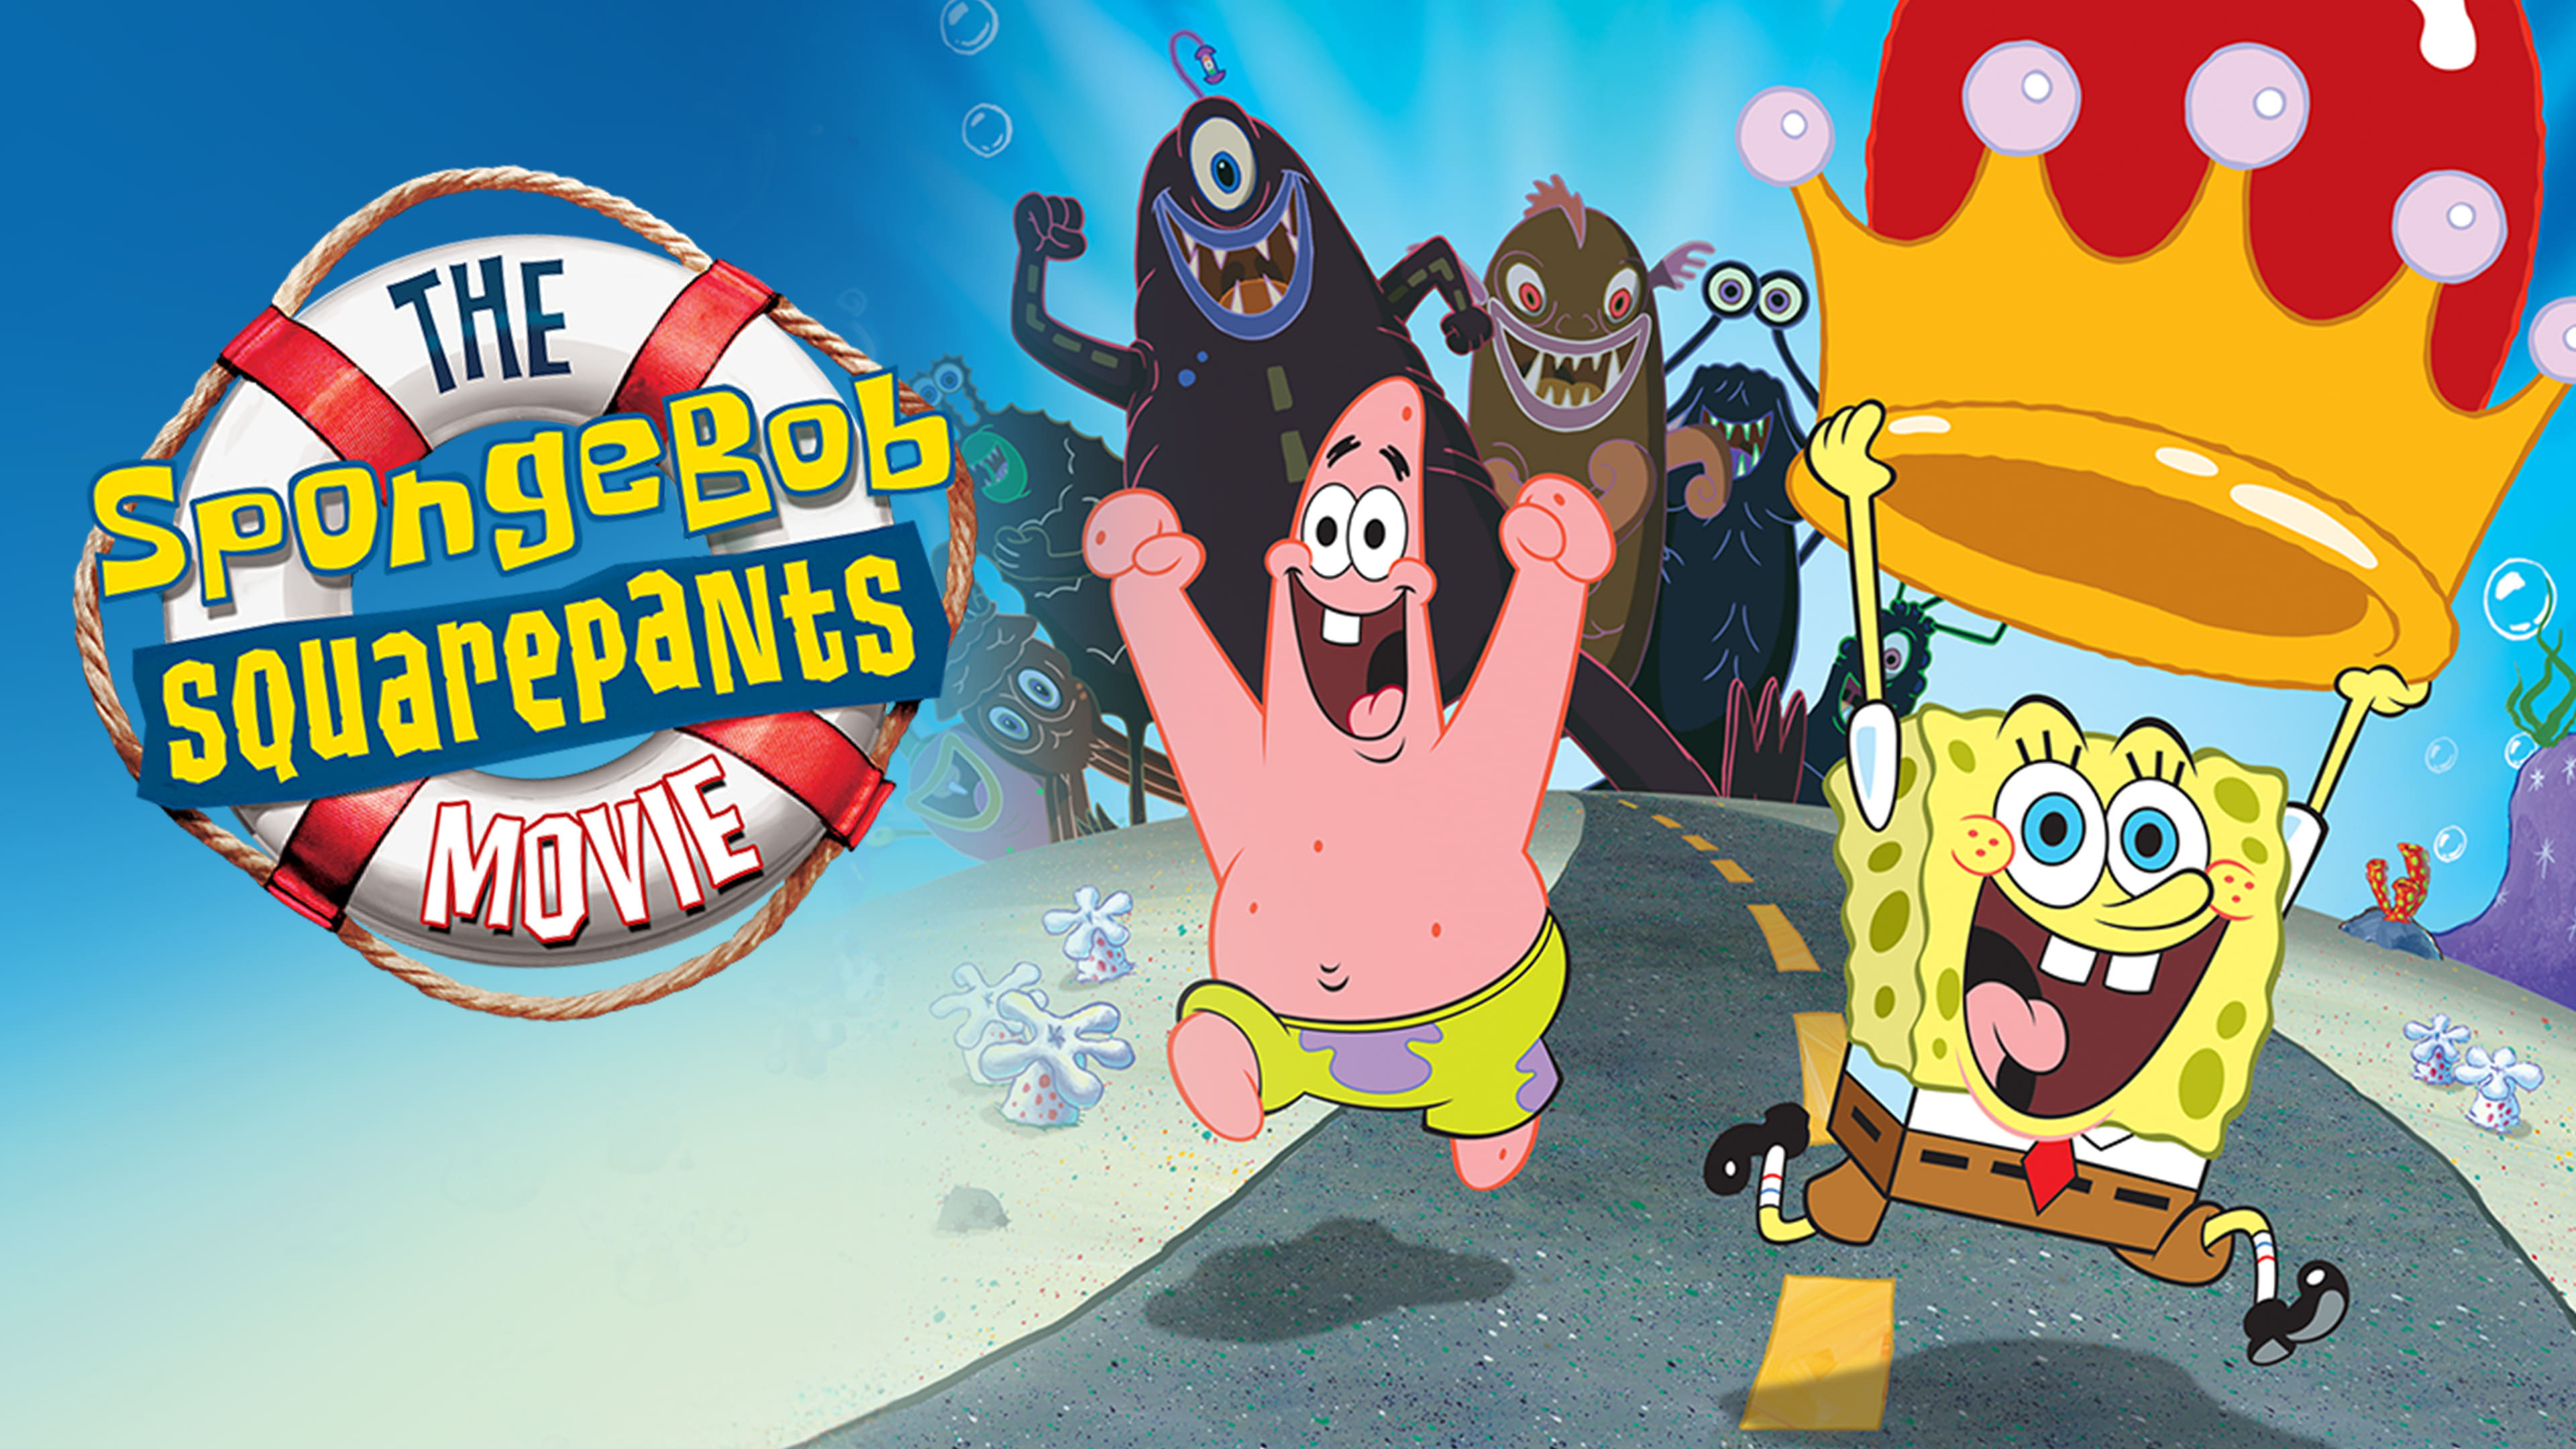 Spongebob v kalhotách: Film (2004)